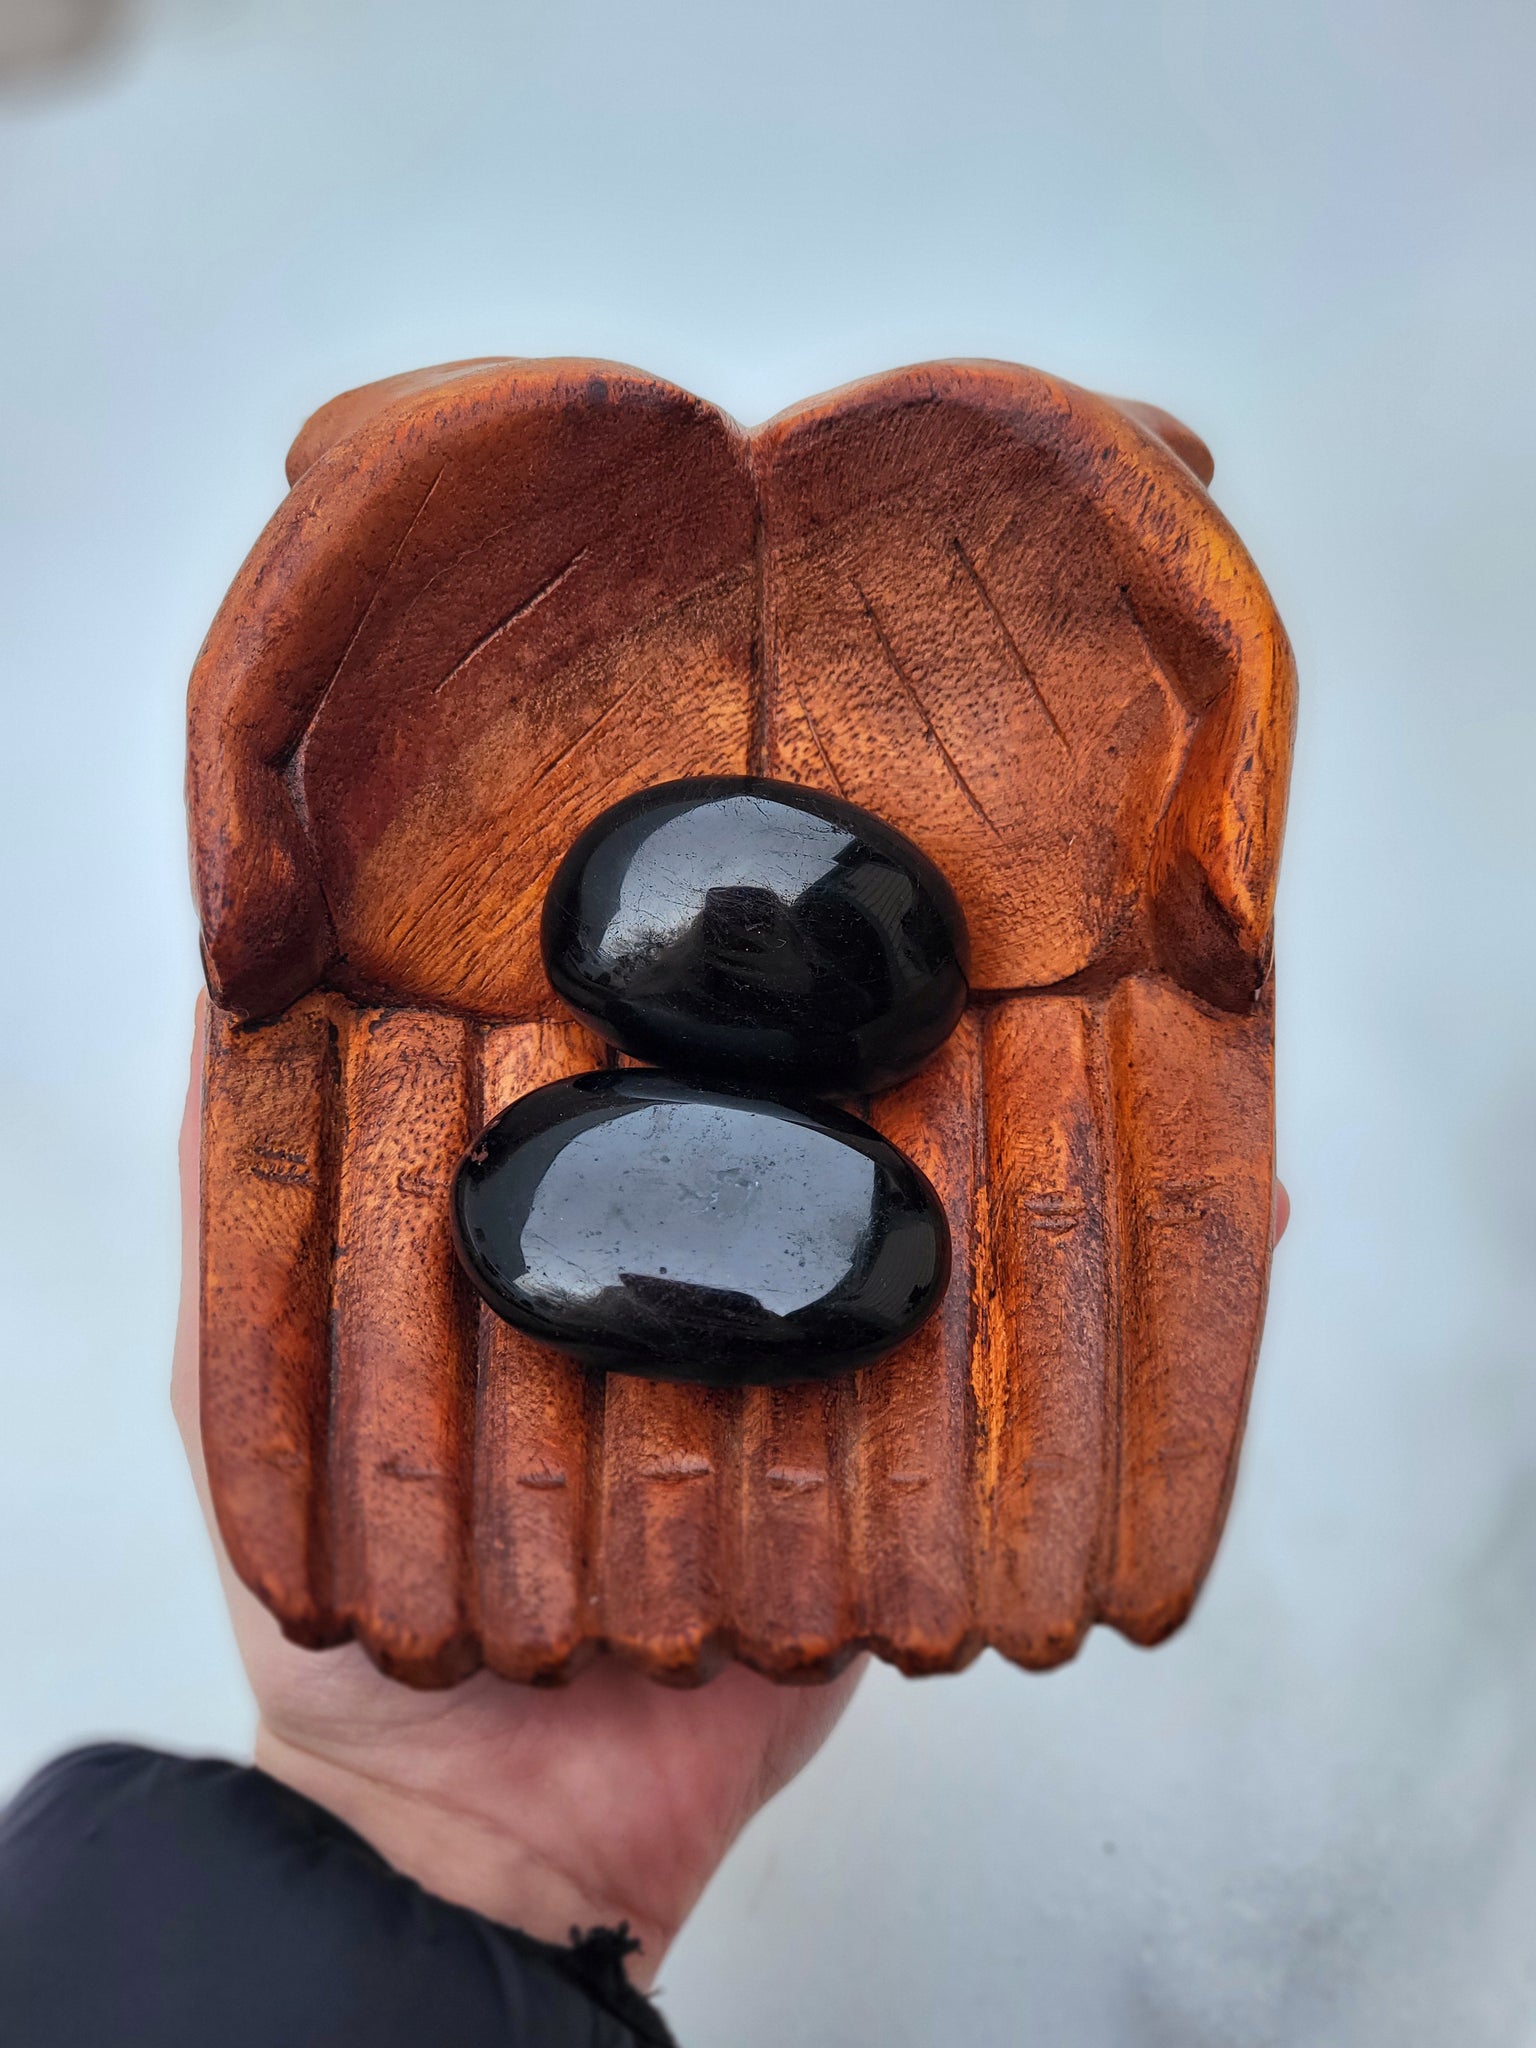 Black Tourmaline Palm Stones